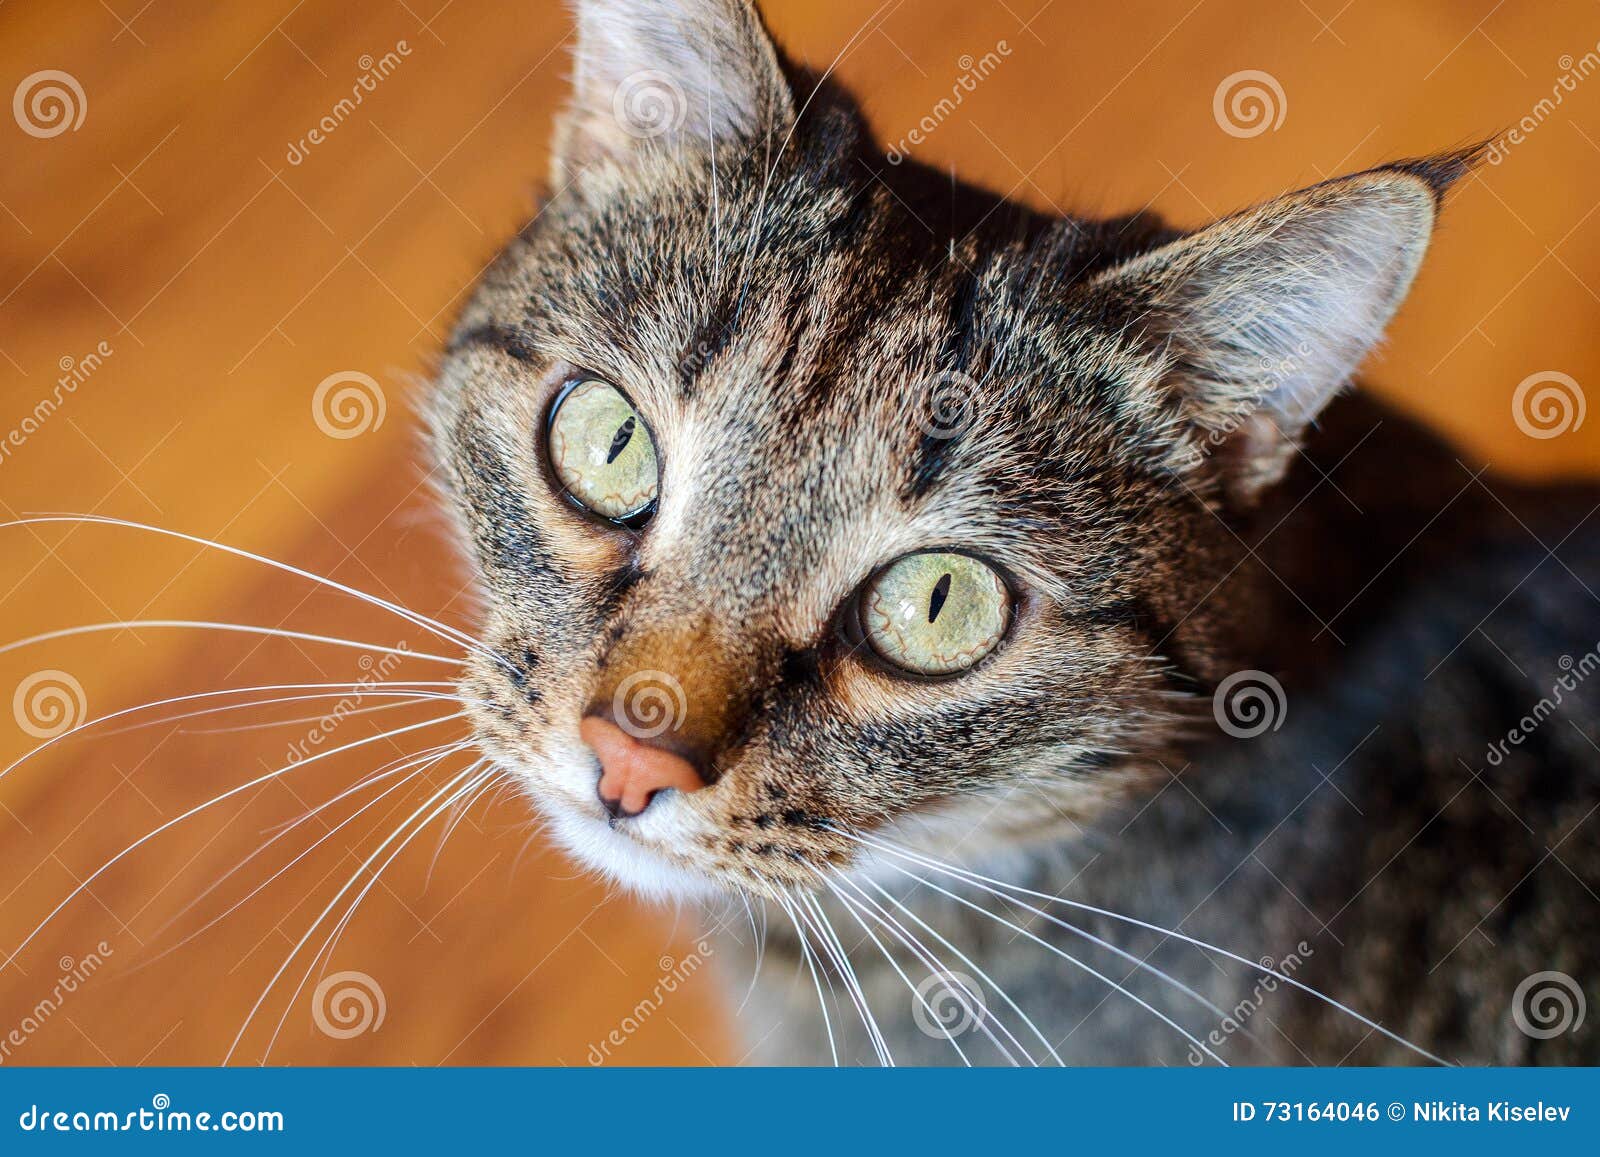 portrait of an ordinary cat